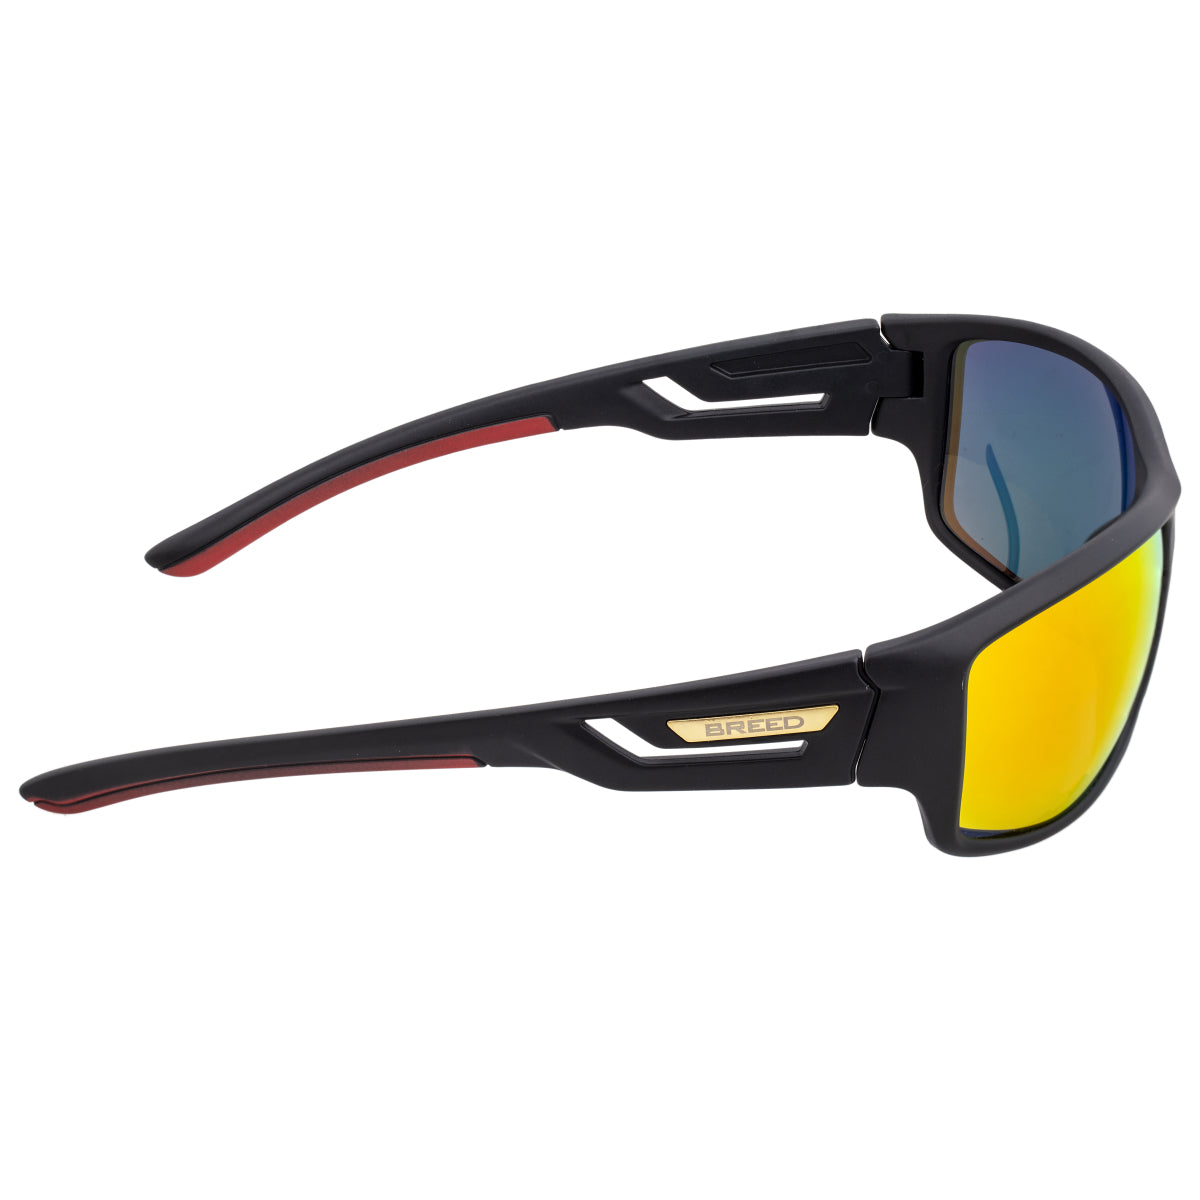 Breed Aquarius Polarized Sunglasses - Black/Red-Yellow - BSG060RD